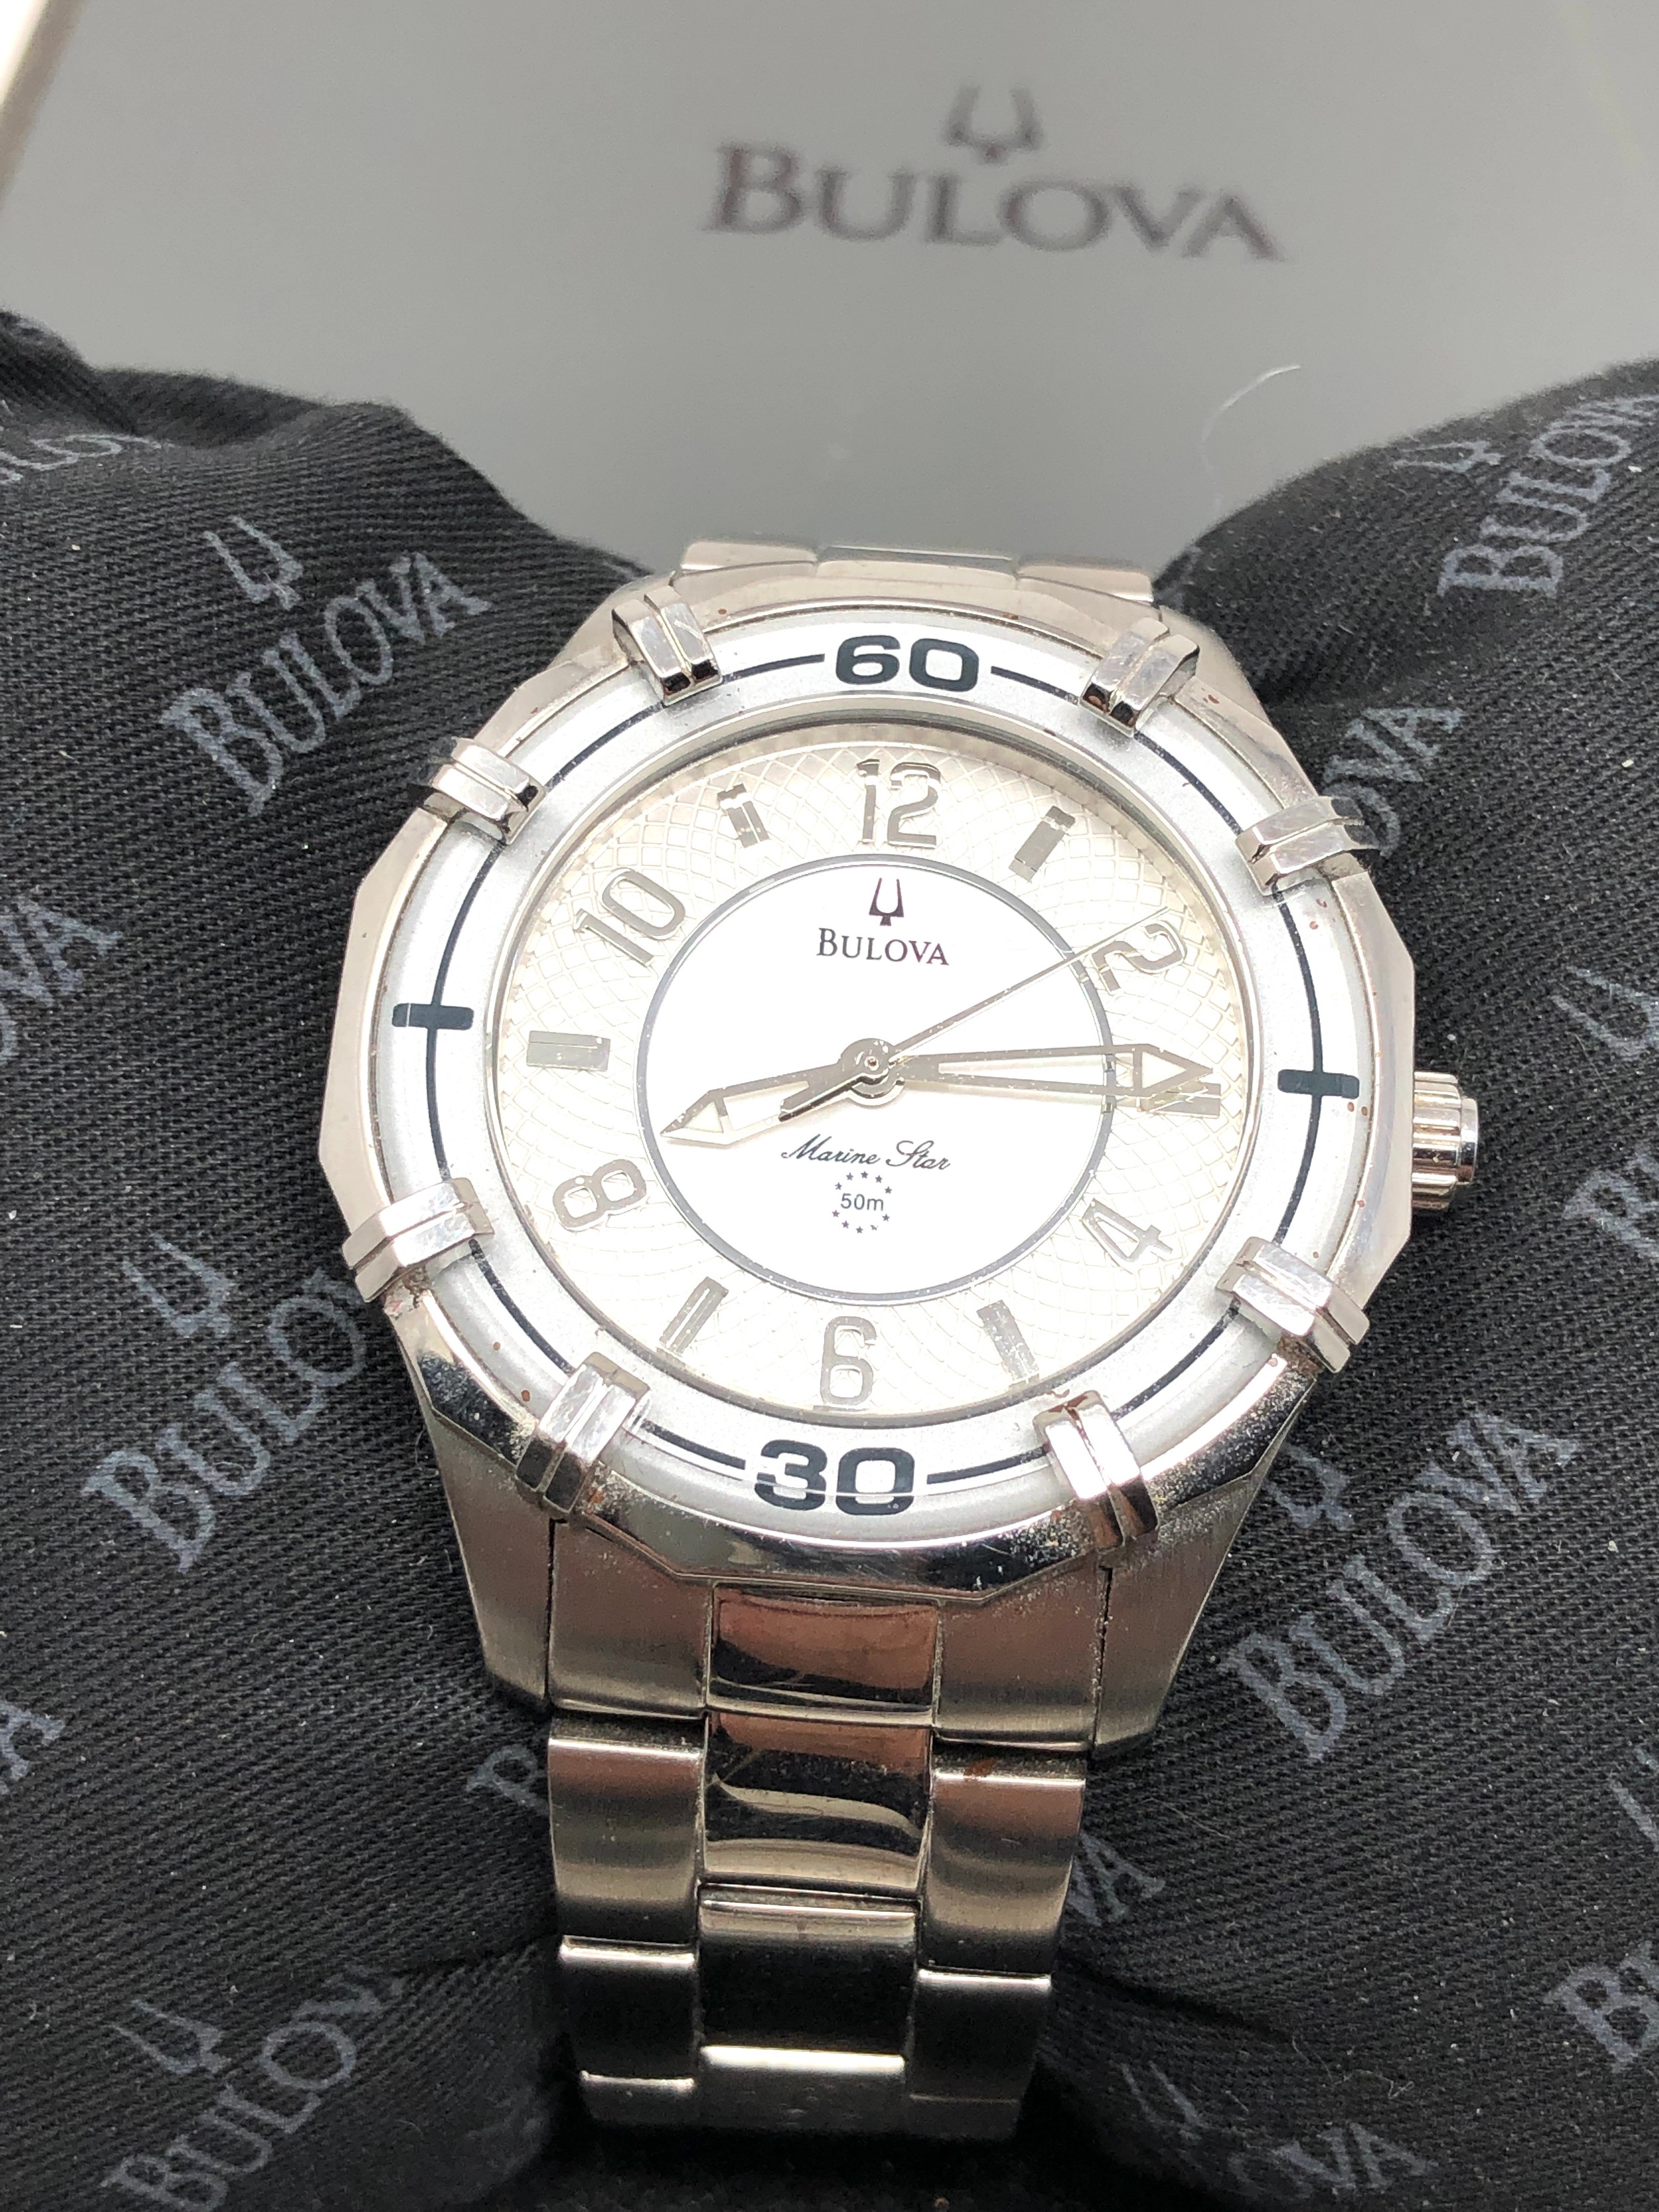 Bulova marine star quartz gents vintage wristwatch the watch is ticking - Image 2 of 3